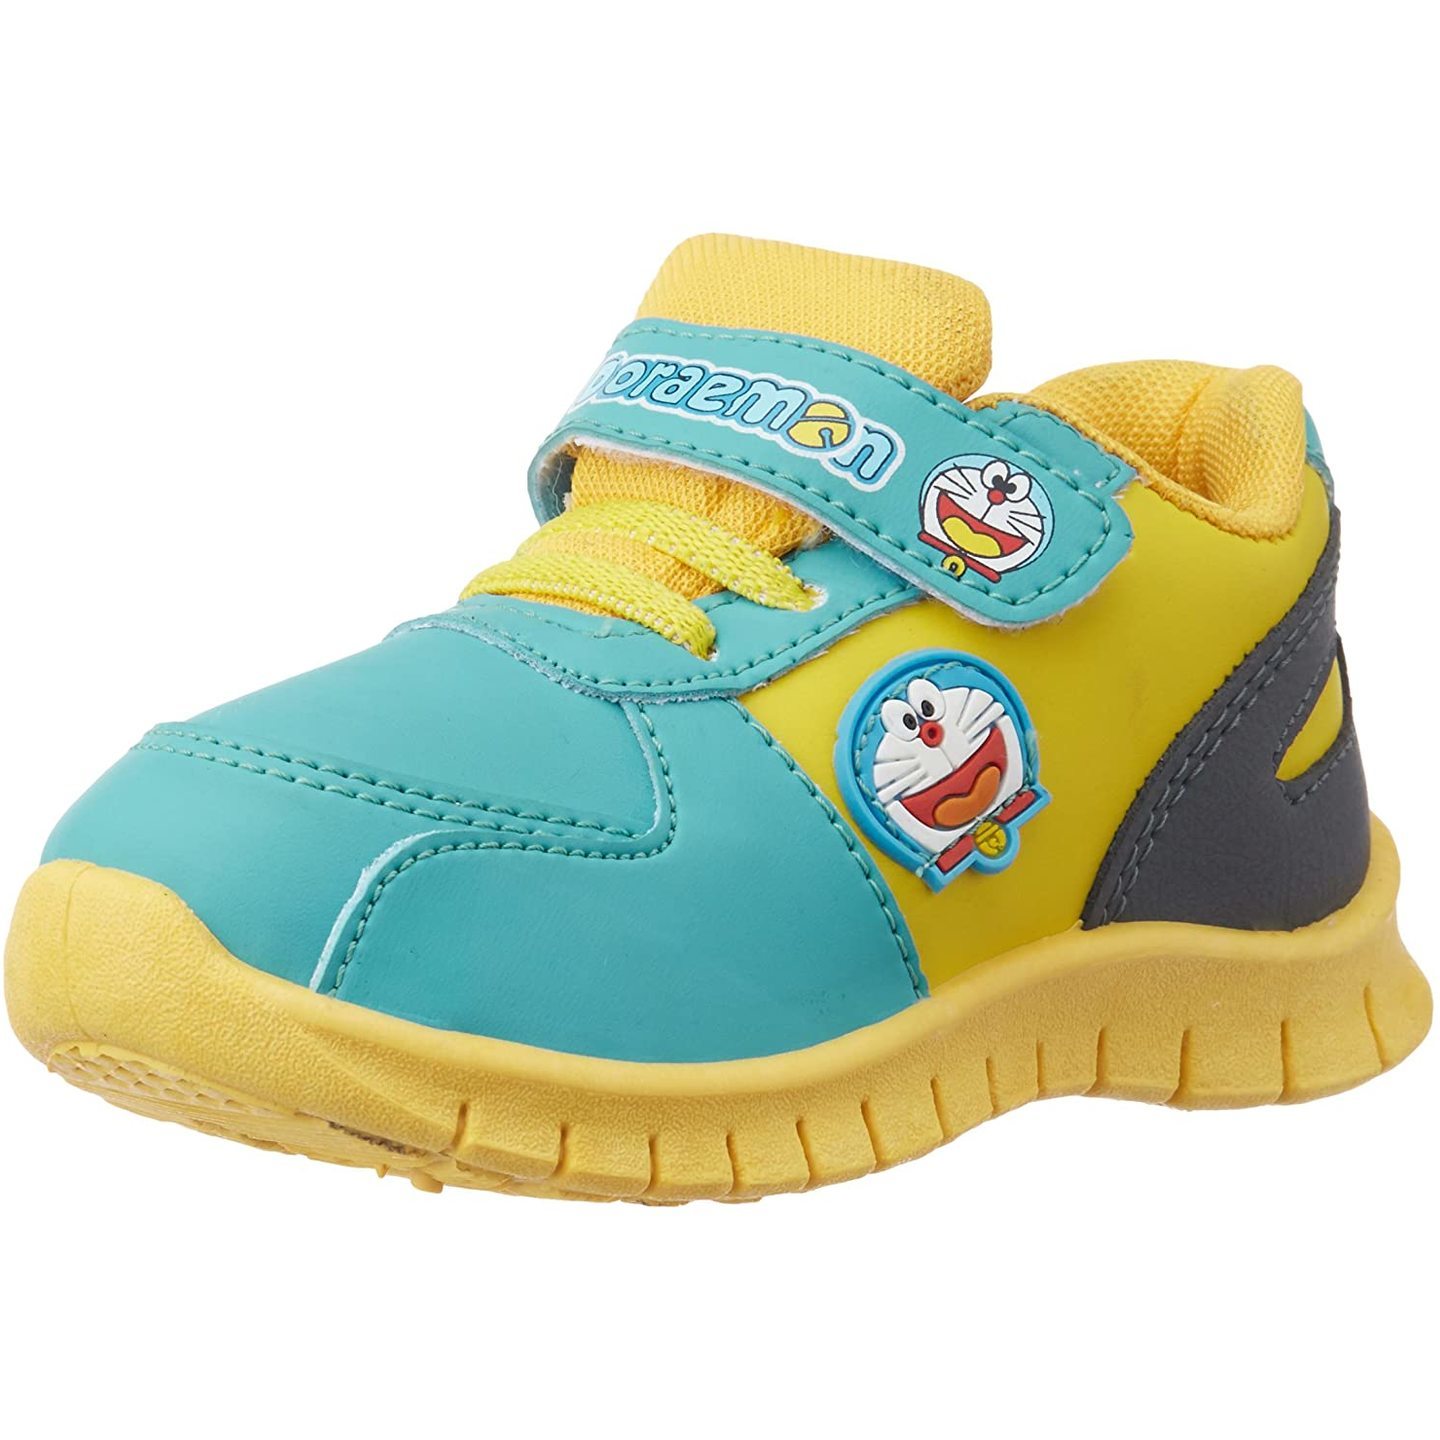 Doraemon Boy's Sneakers